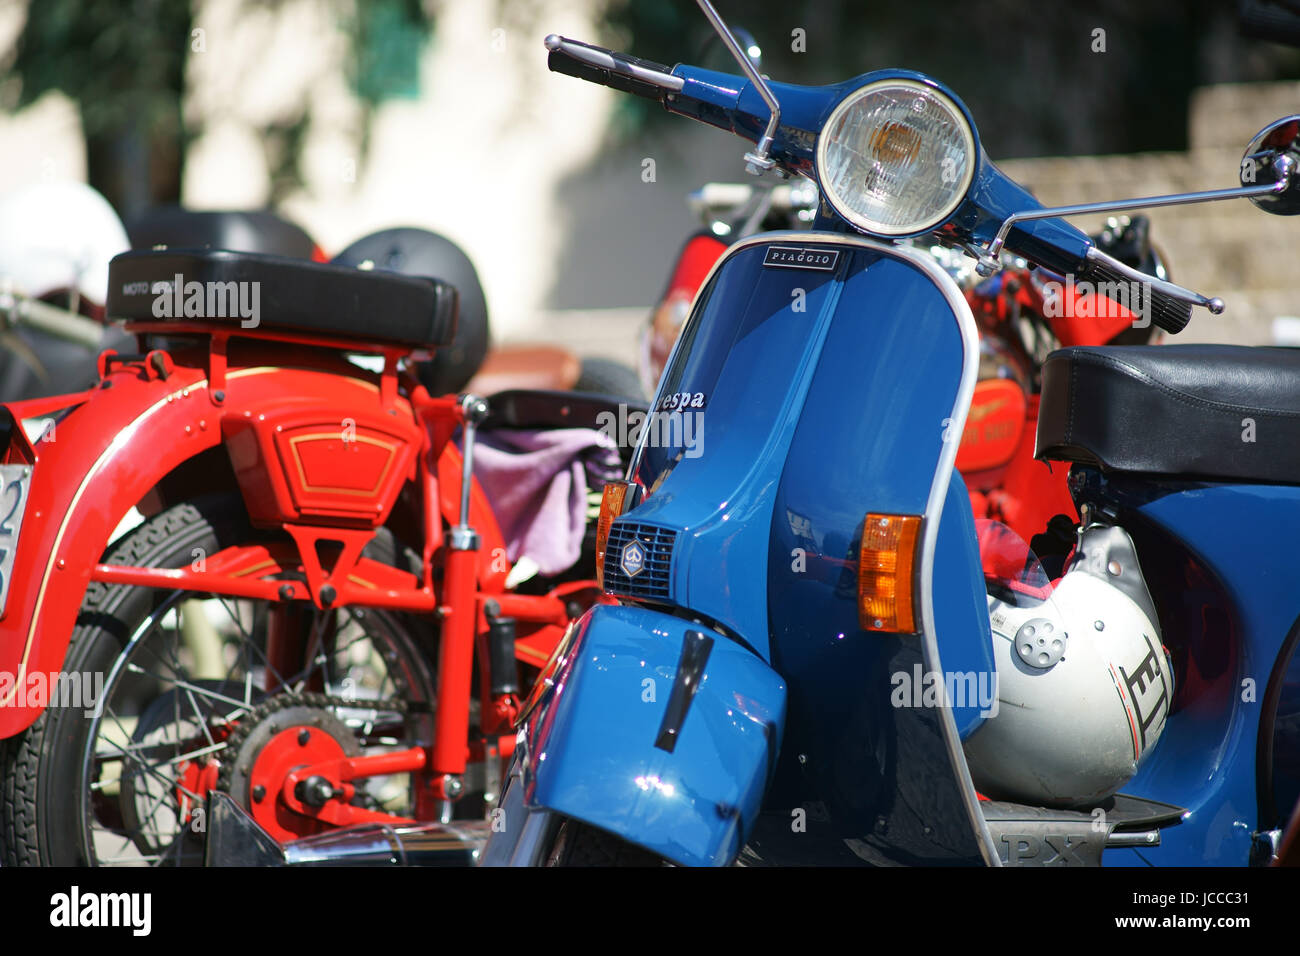 Alte italienische Motorrad - Vespa piaggio Stockfotografie - Alamy